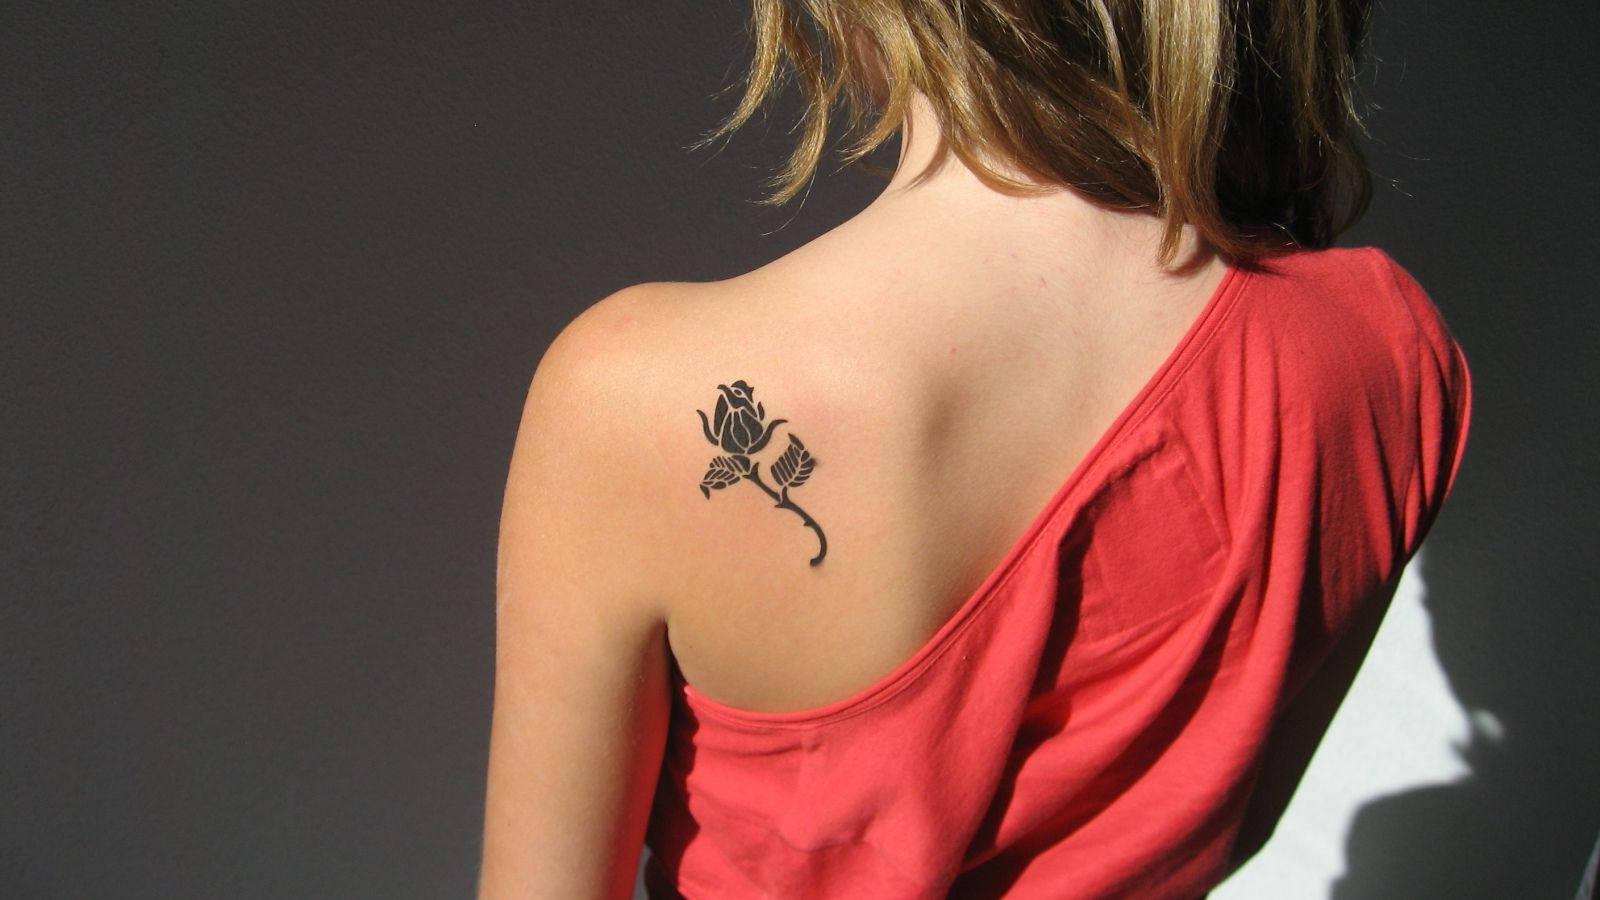 Girl Tattoos On Shoulder Blade 30 Small Cute Tattoos For Girls regarding size 1600 X 900